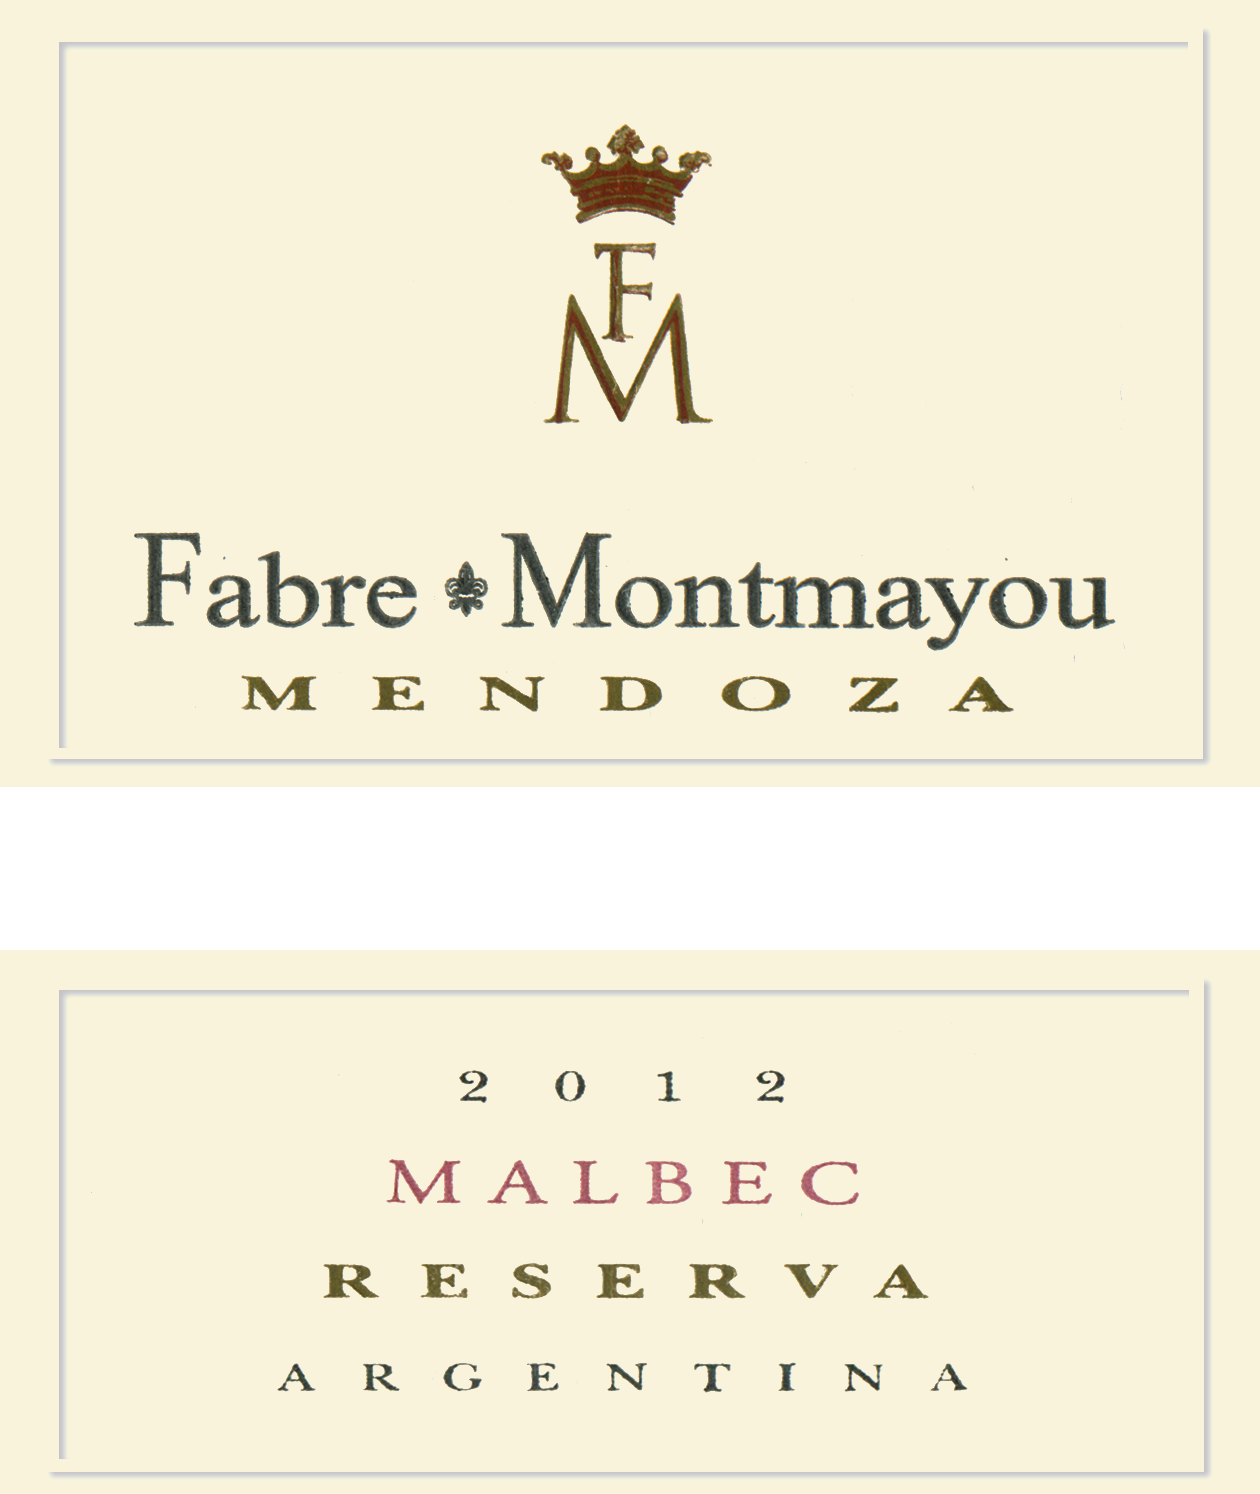 2015 Fabre Montmayou Malbec Reserva Mendoza - click image for full description